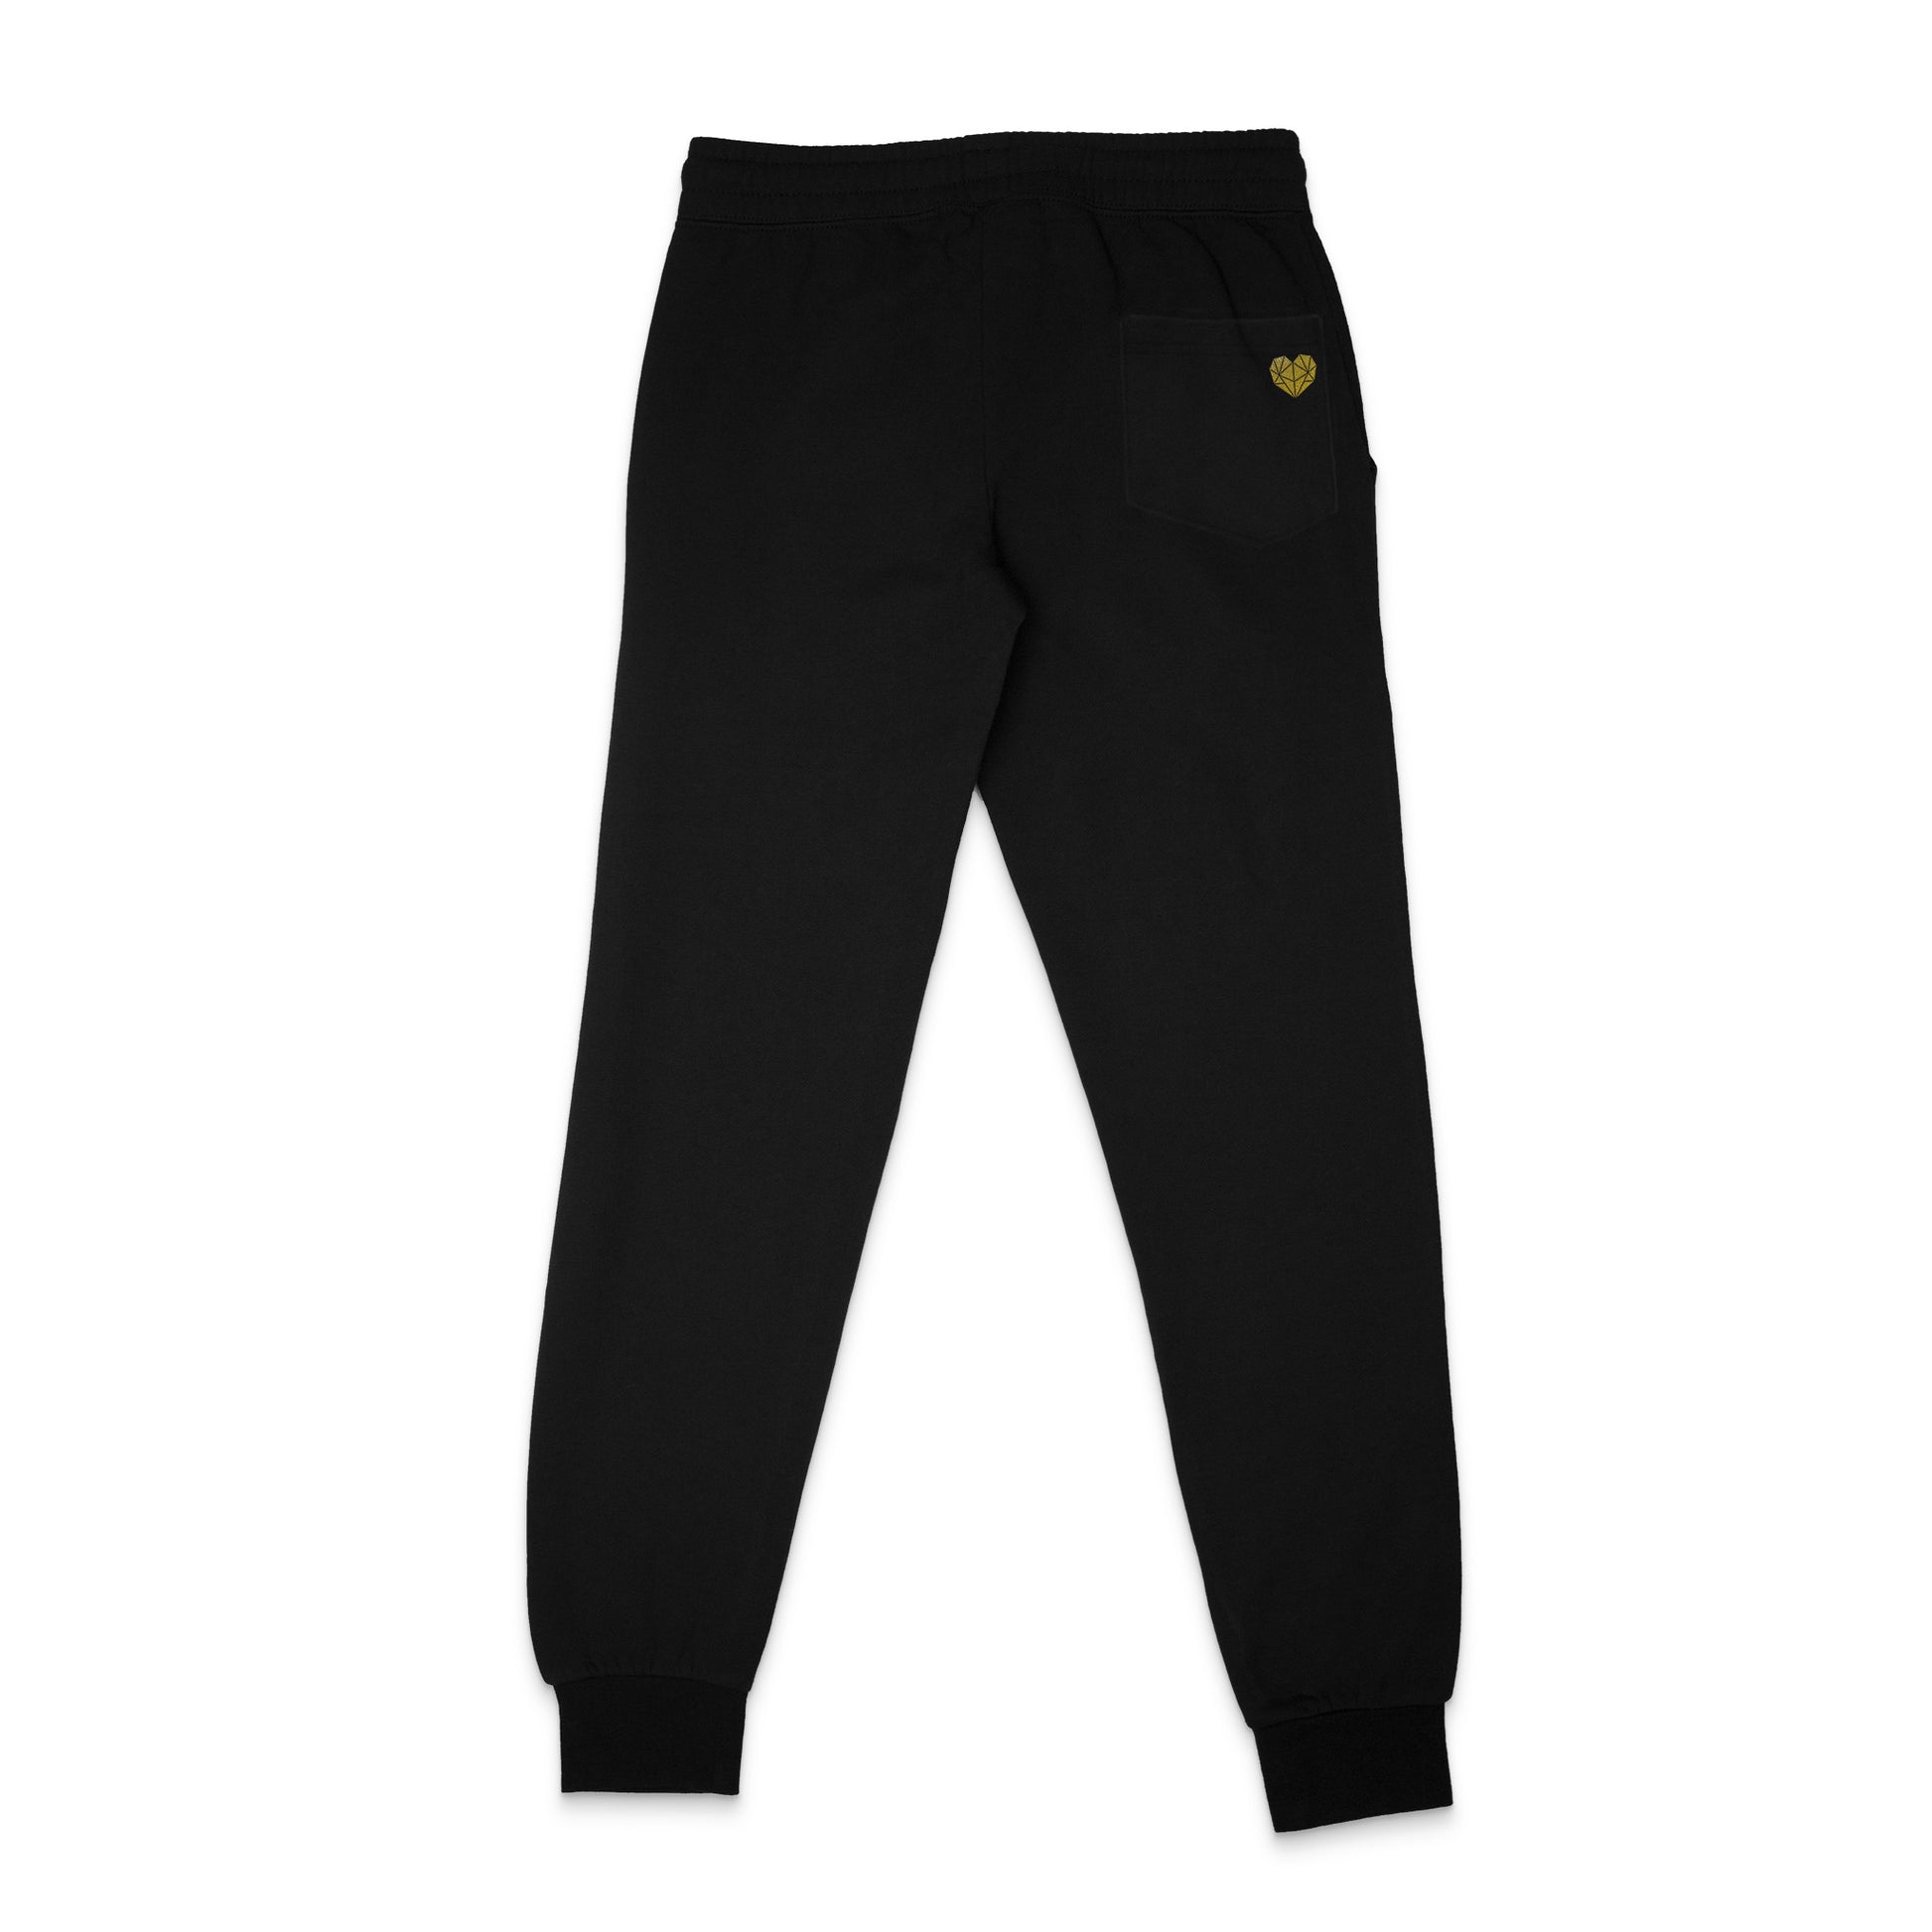 Fancy Pants back - fancy text on leg sides, gold sparkle on black unisex, ethically-made sweatpants by BBJ / Glitter Garage